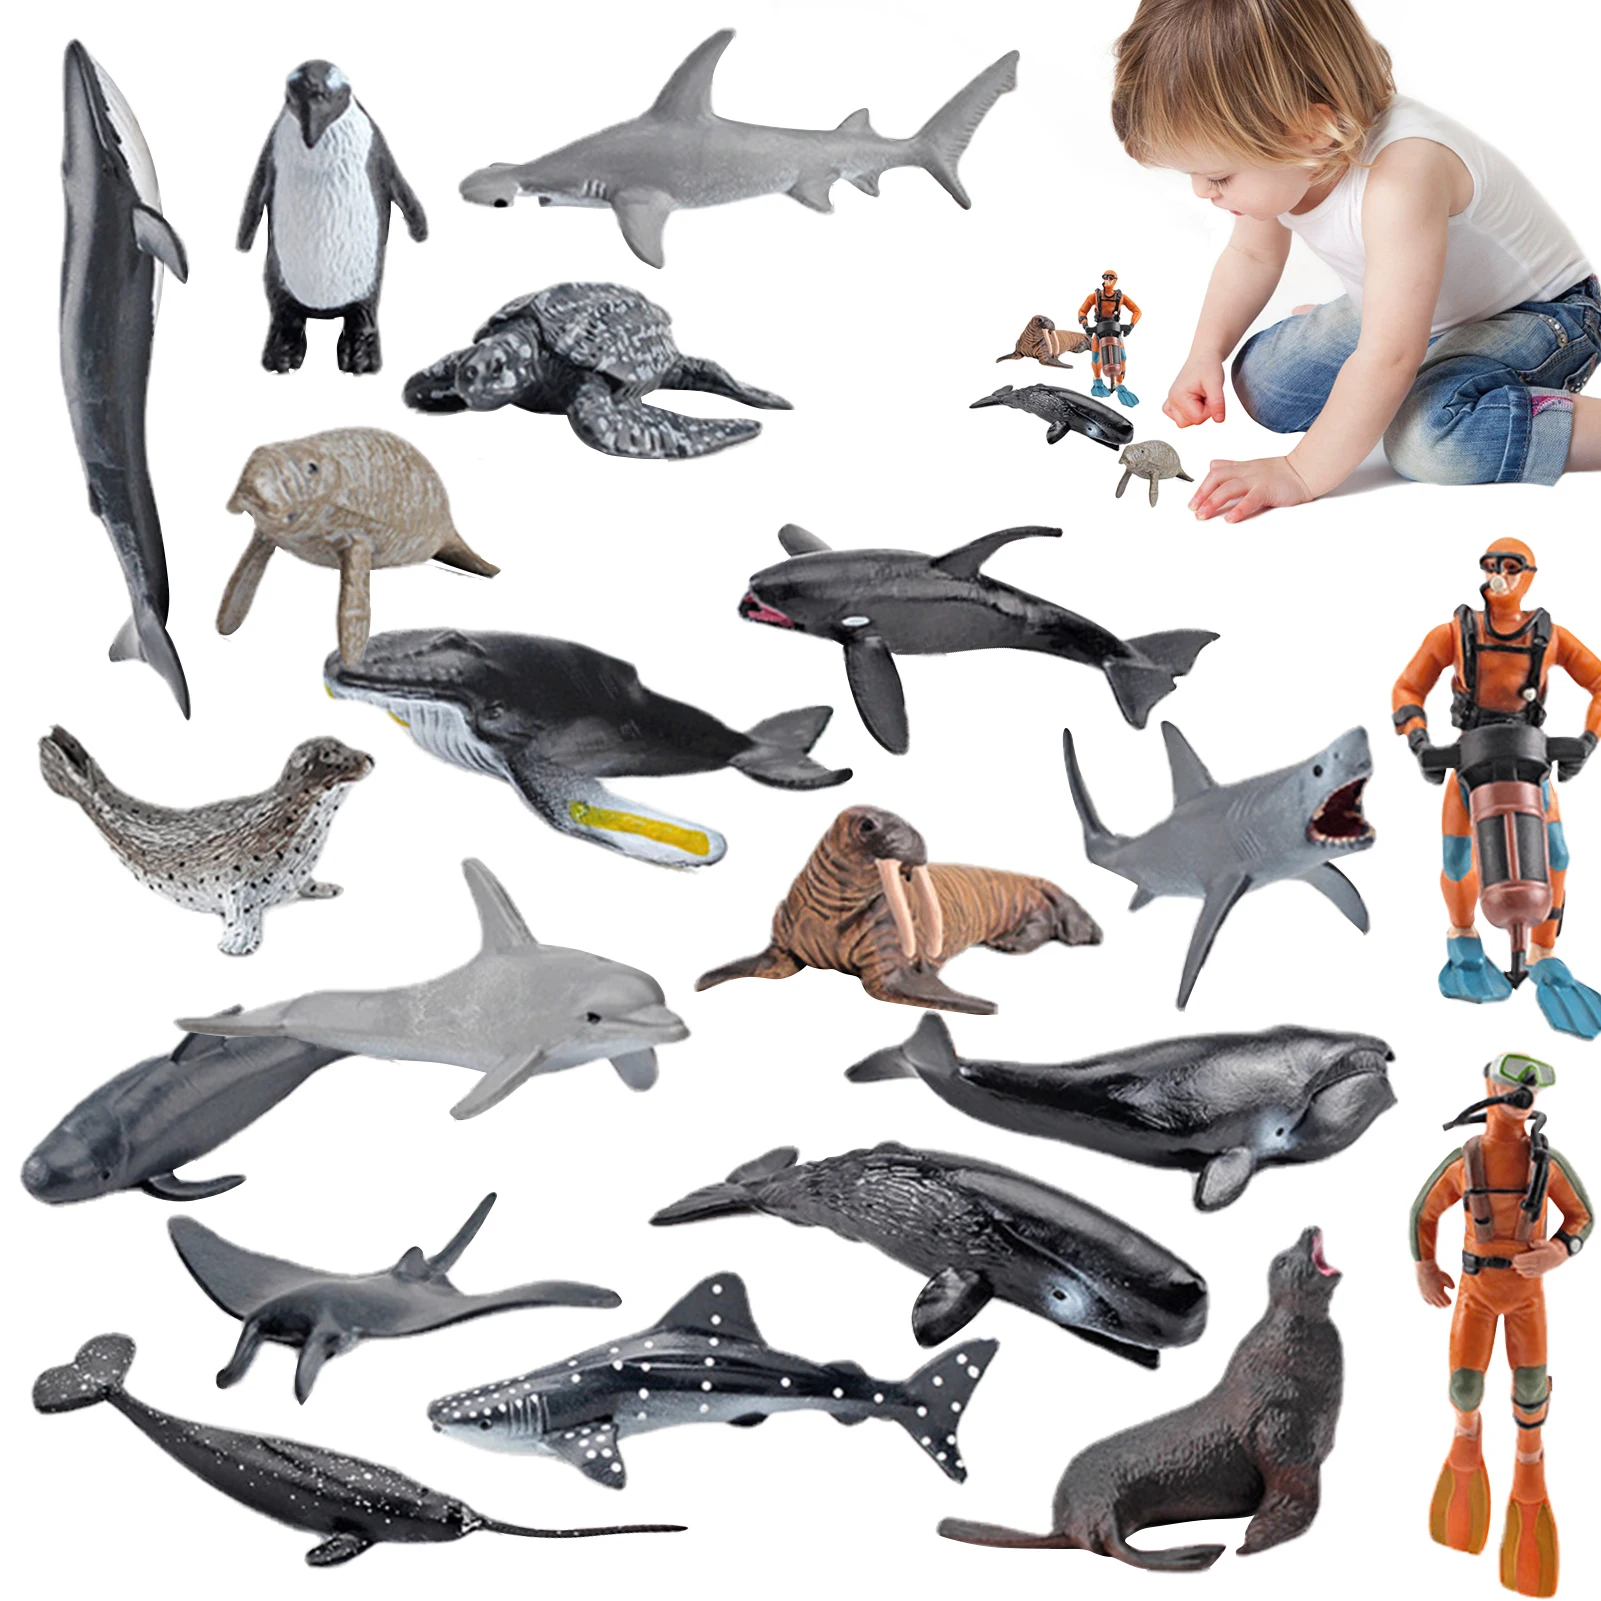 

Mini Sea Animal Figures Toy 20PCS Small Ocean Animal Figurine Set With Sharks Whales Arctic Animal Educational Shower Bath Toys